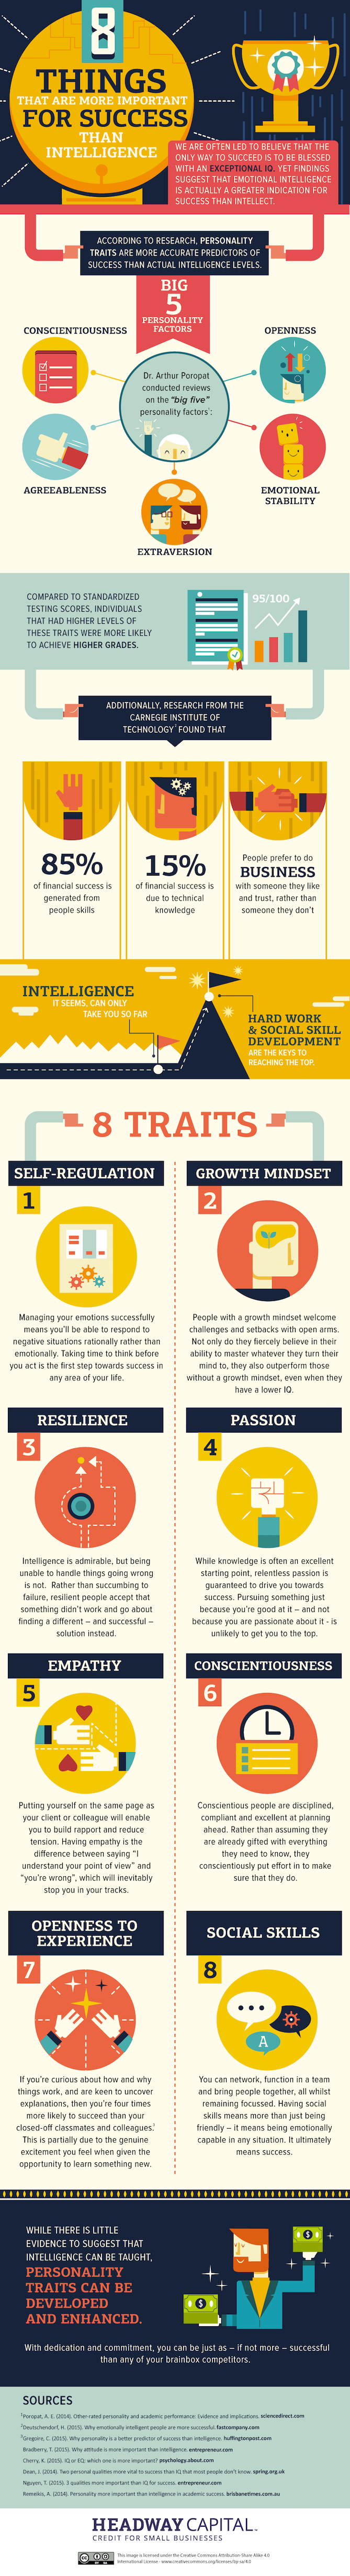 success-traits